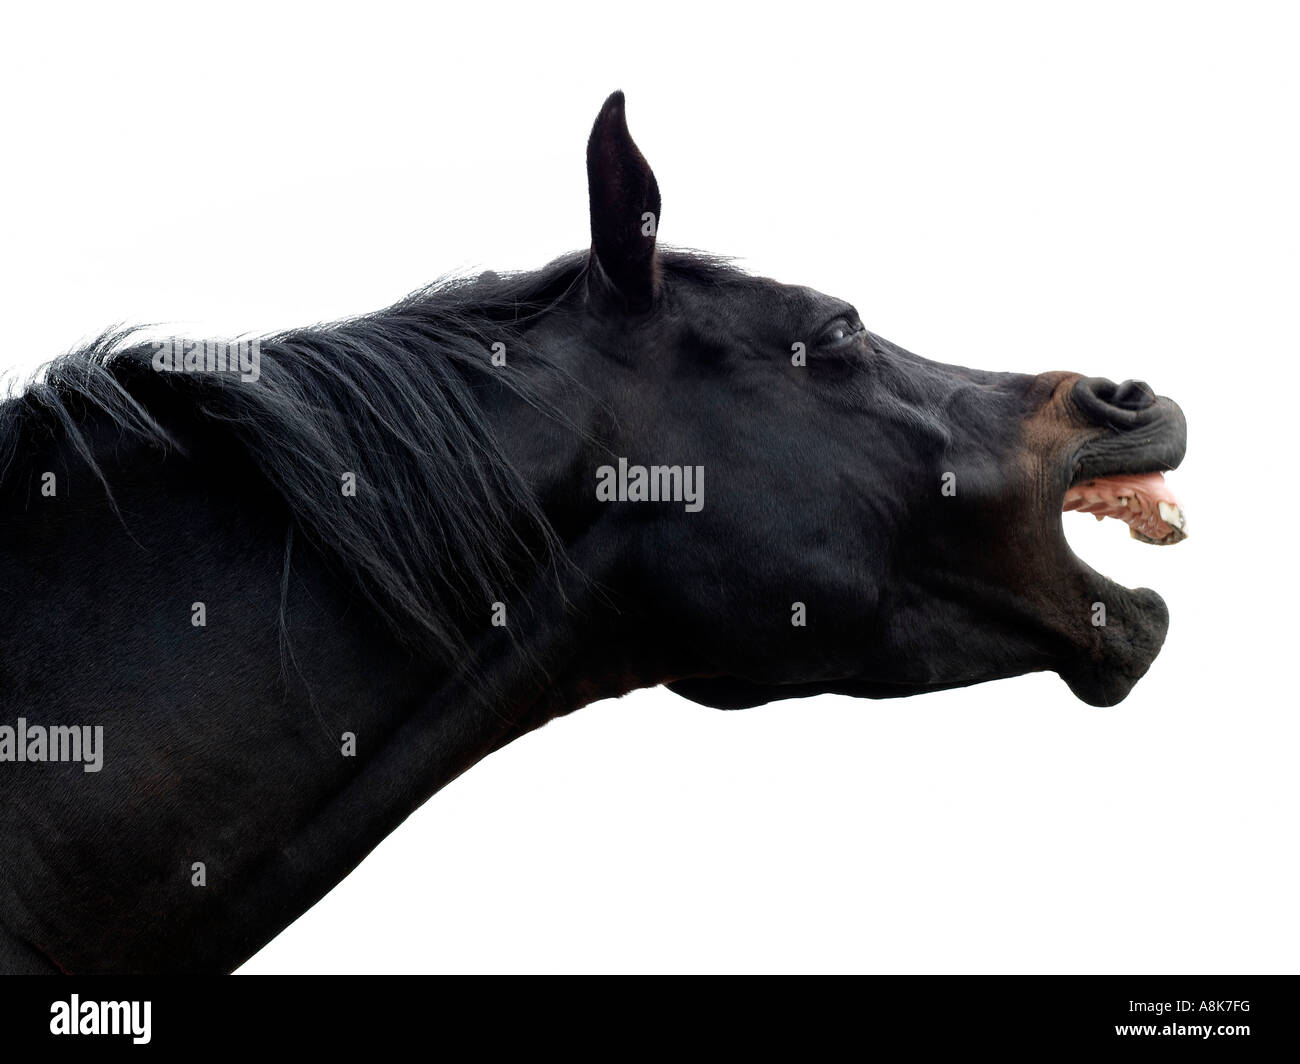 A black arab horse calling. Stock Photo